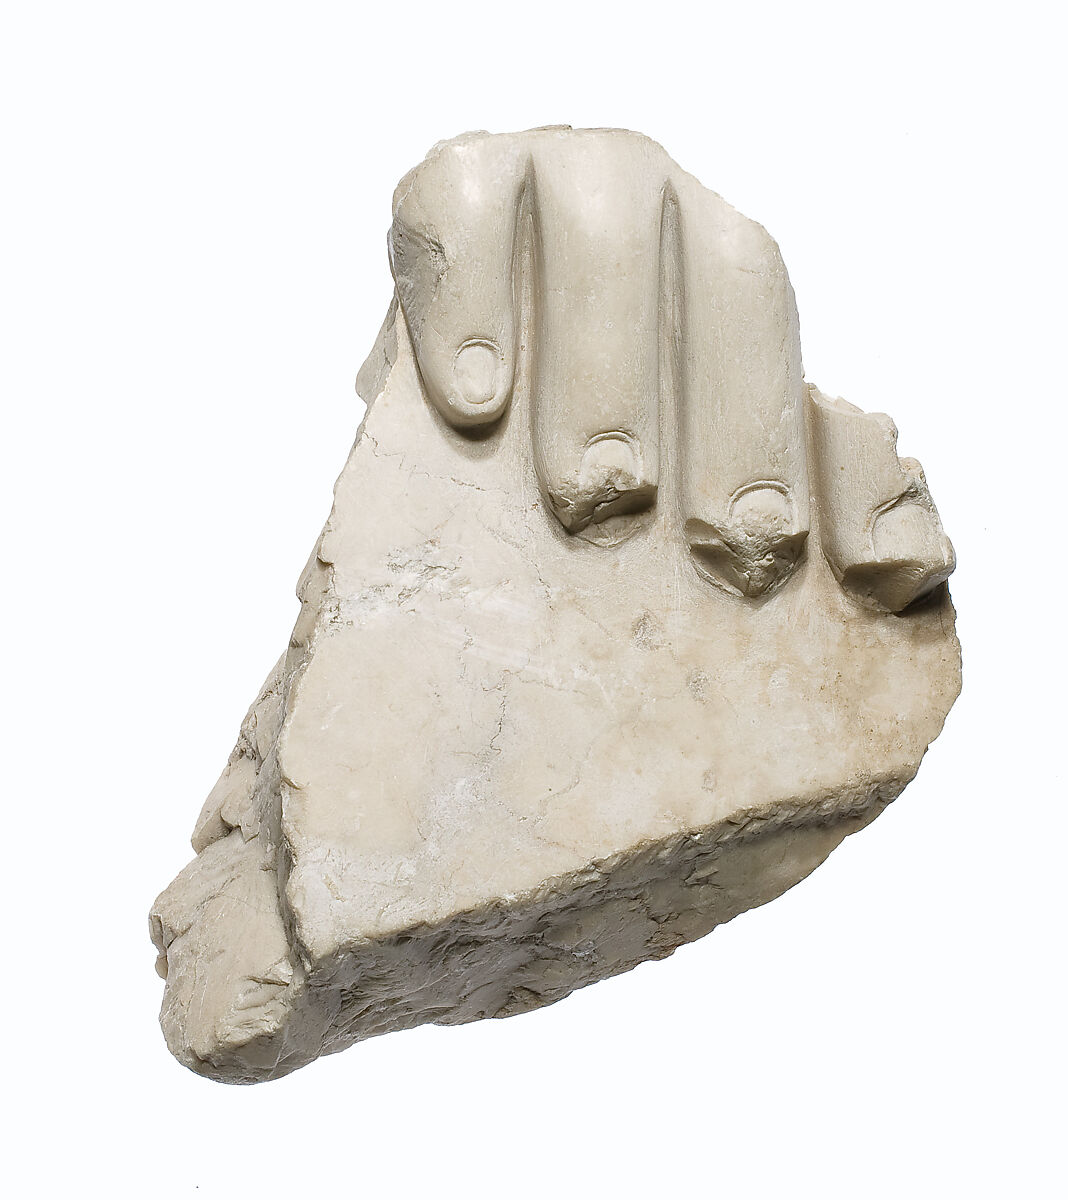 Toe fragment, Indurated limestone 